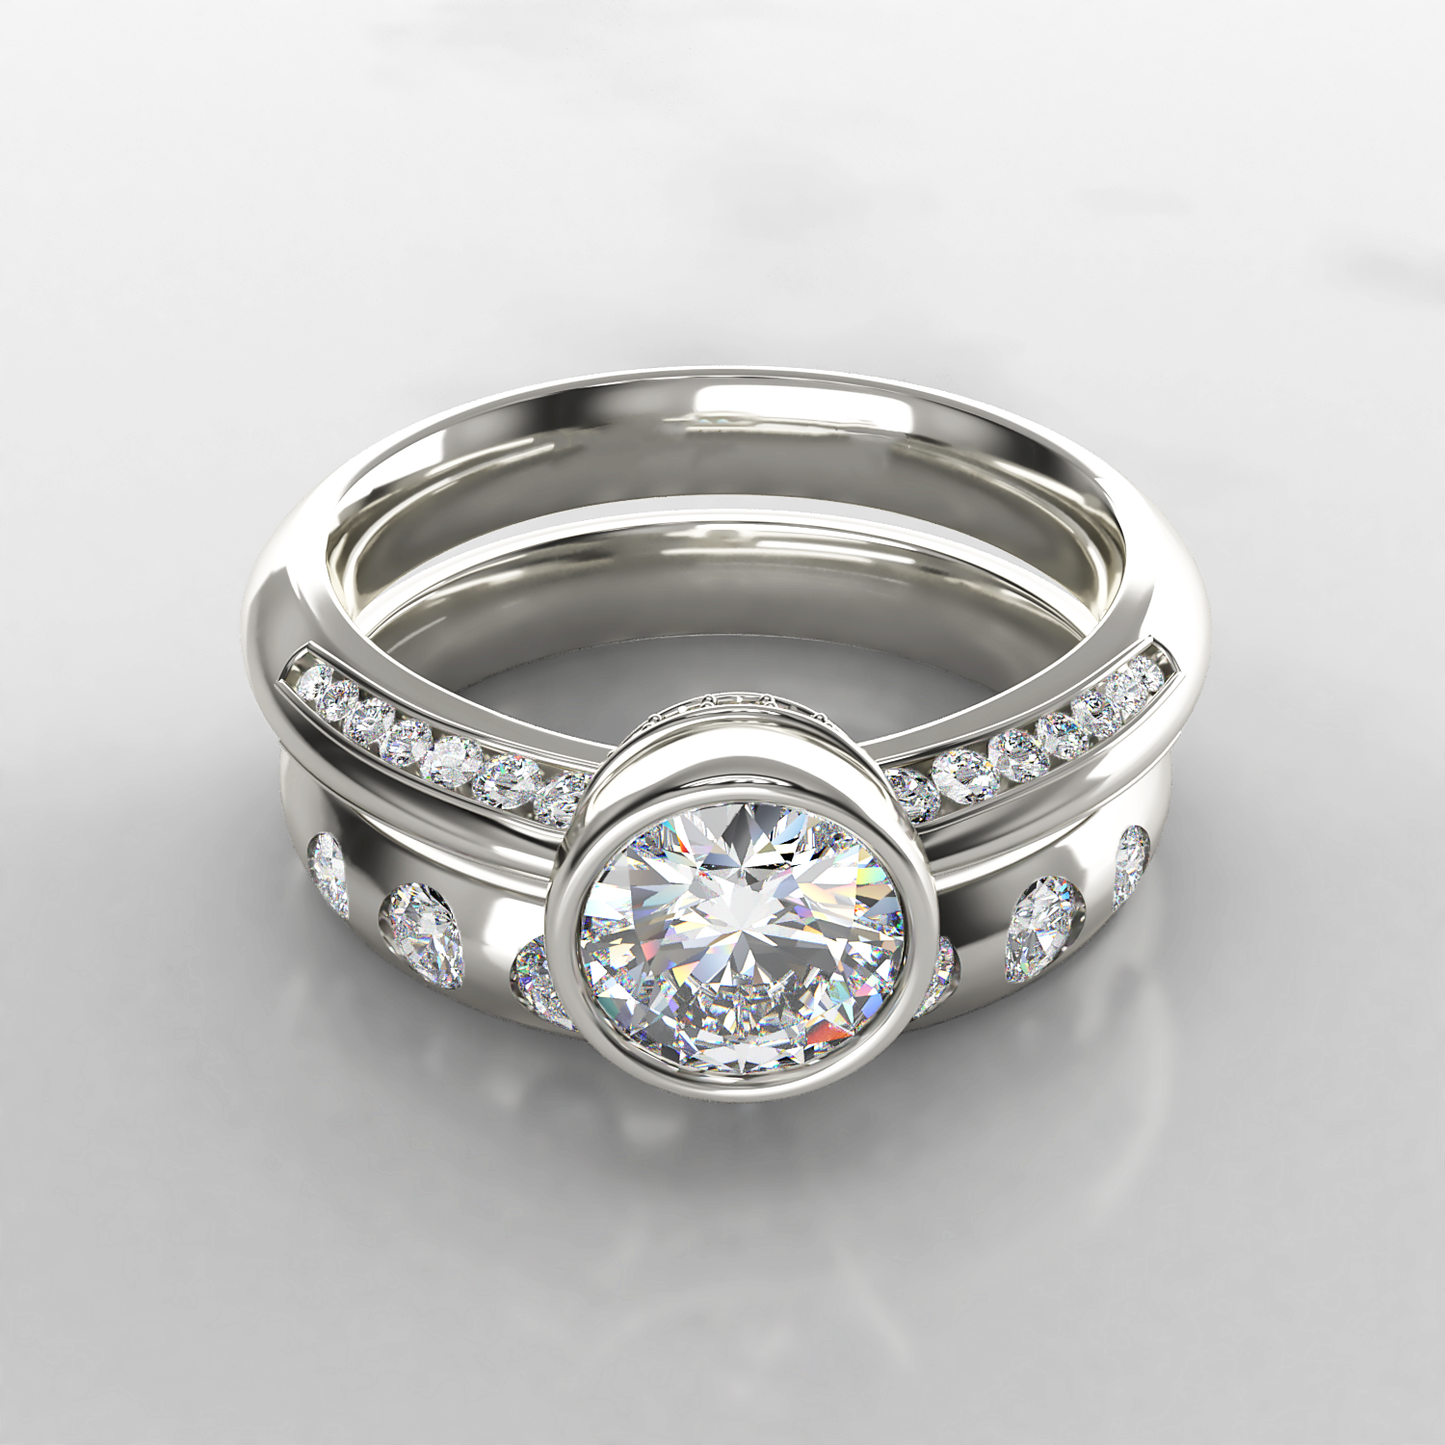 Elsbeth: 18ct White Gold Diamond Set Wedding Ring